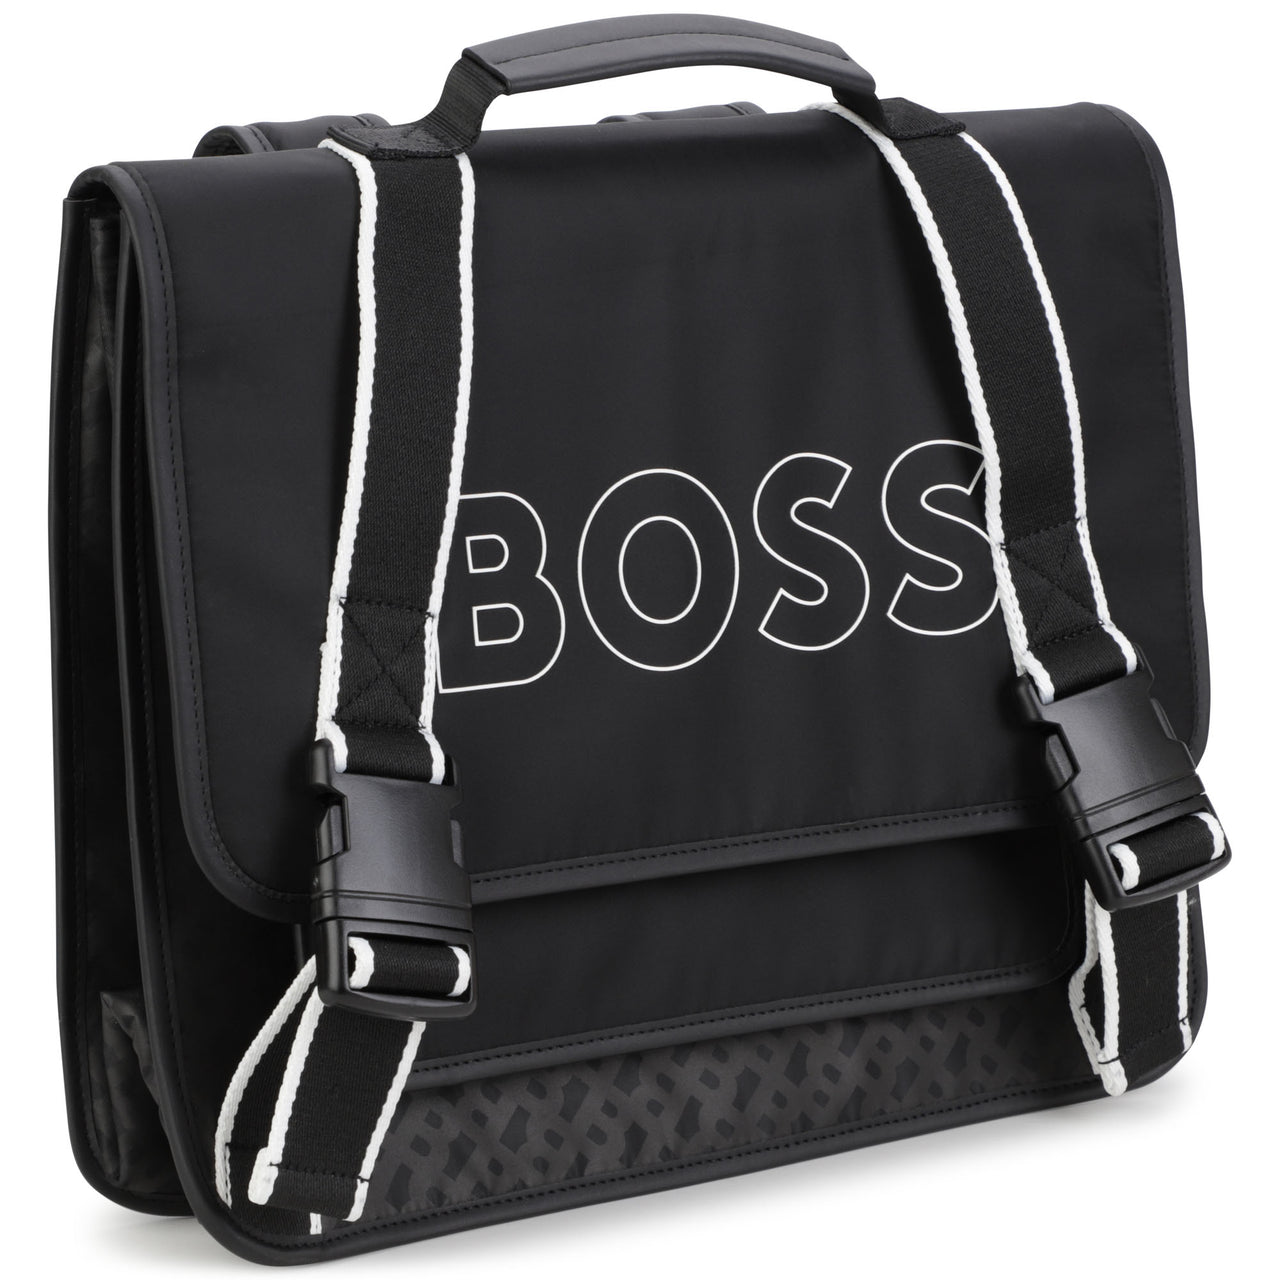 Backpack tipo portafolio BOSS negra unisex